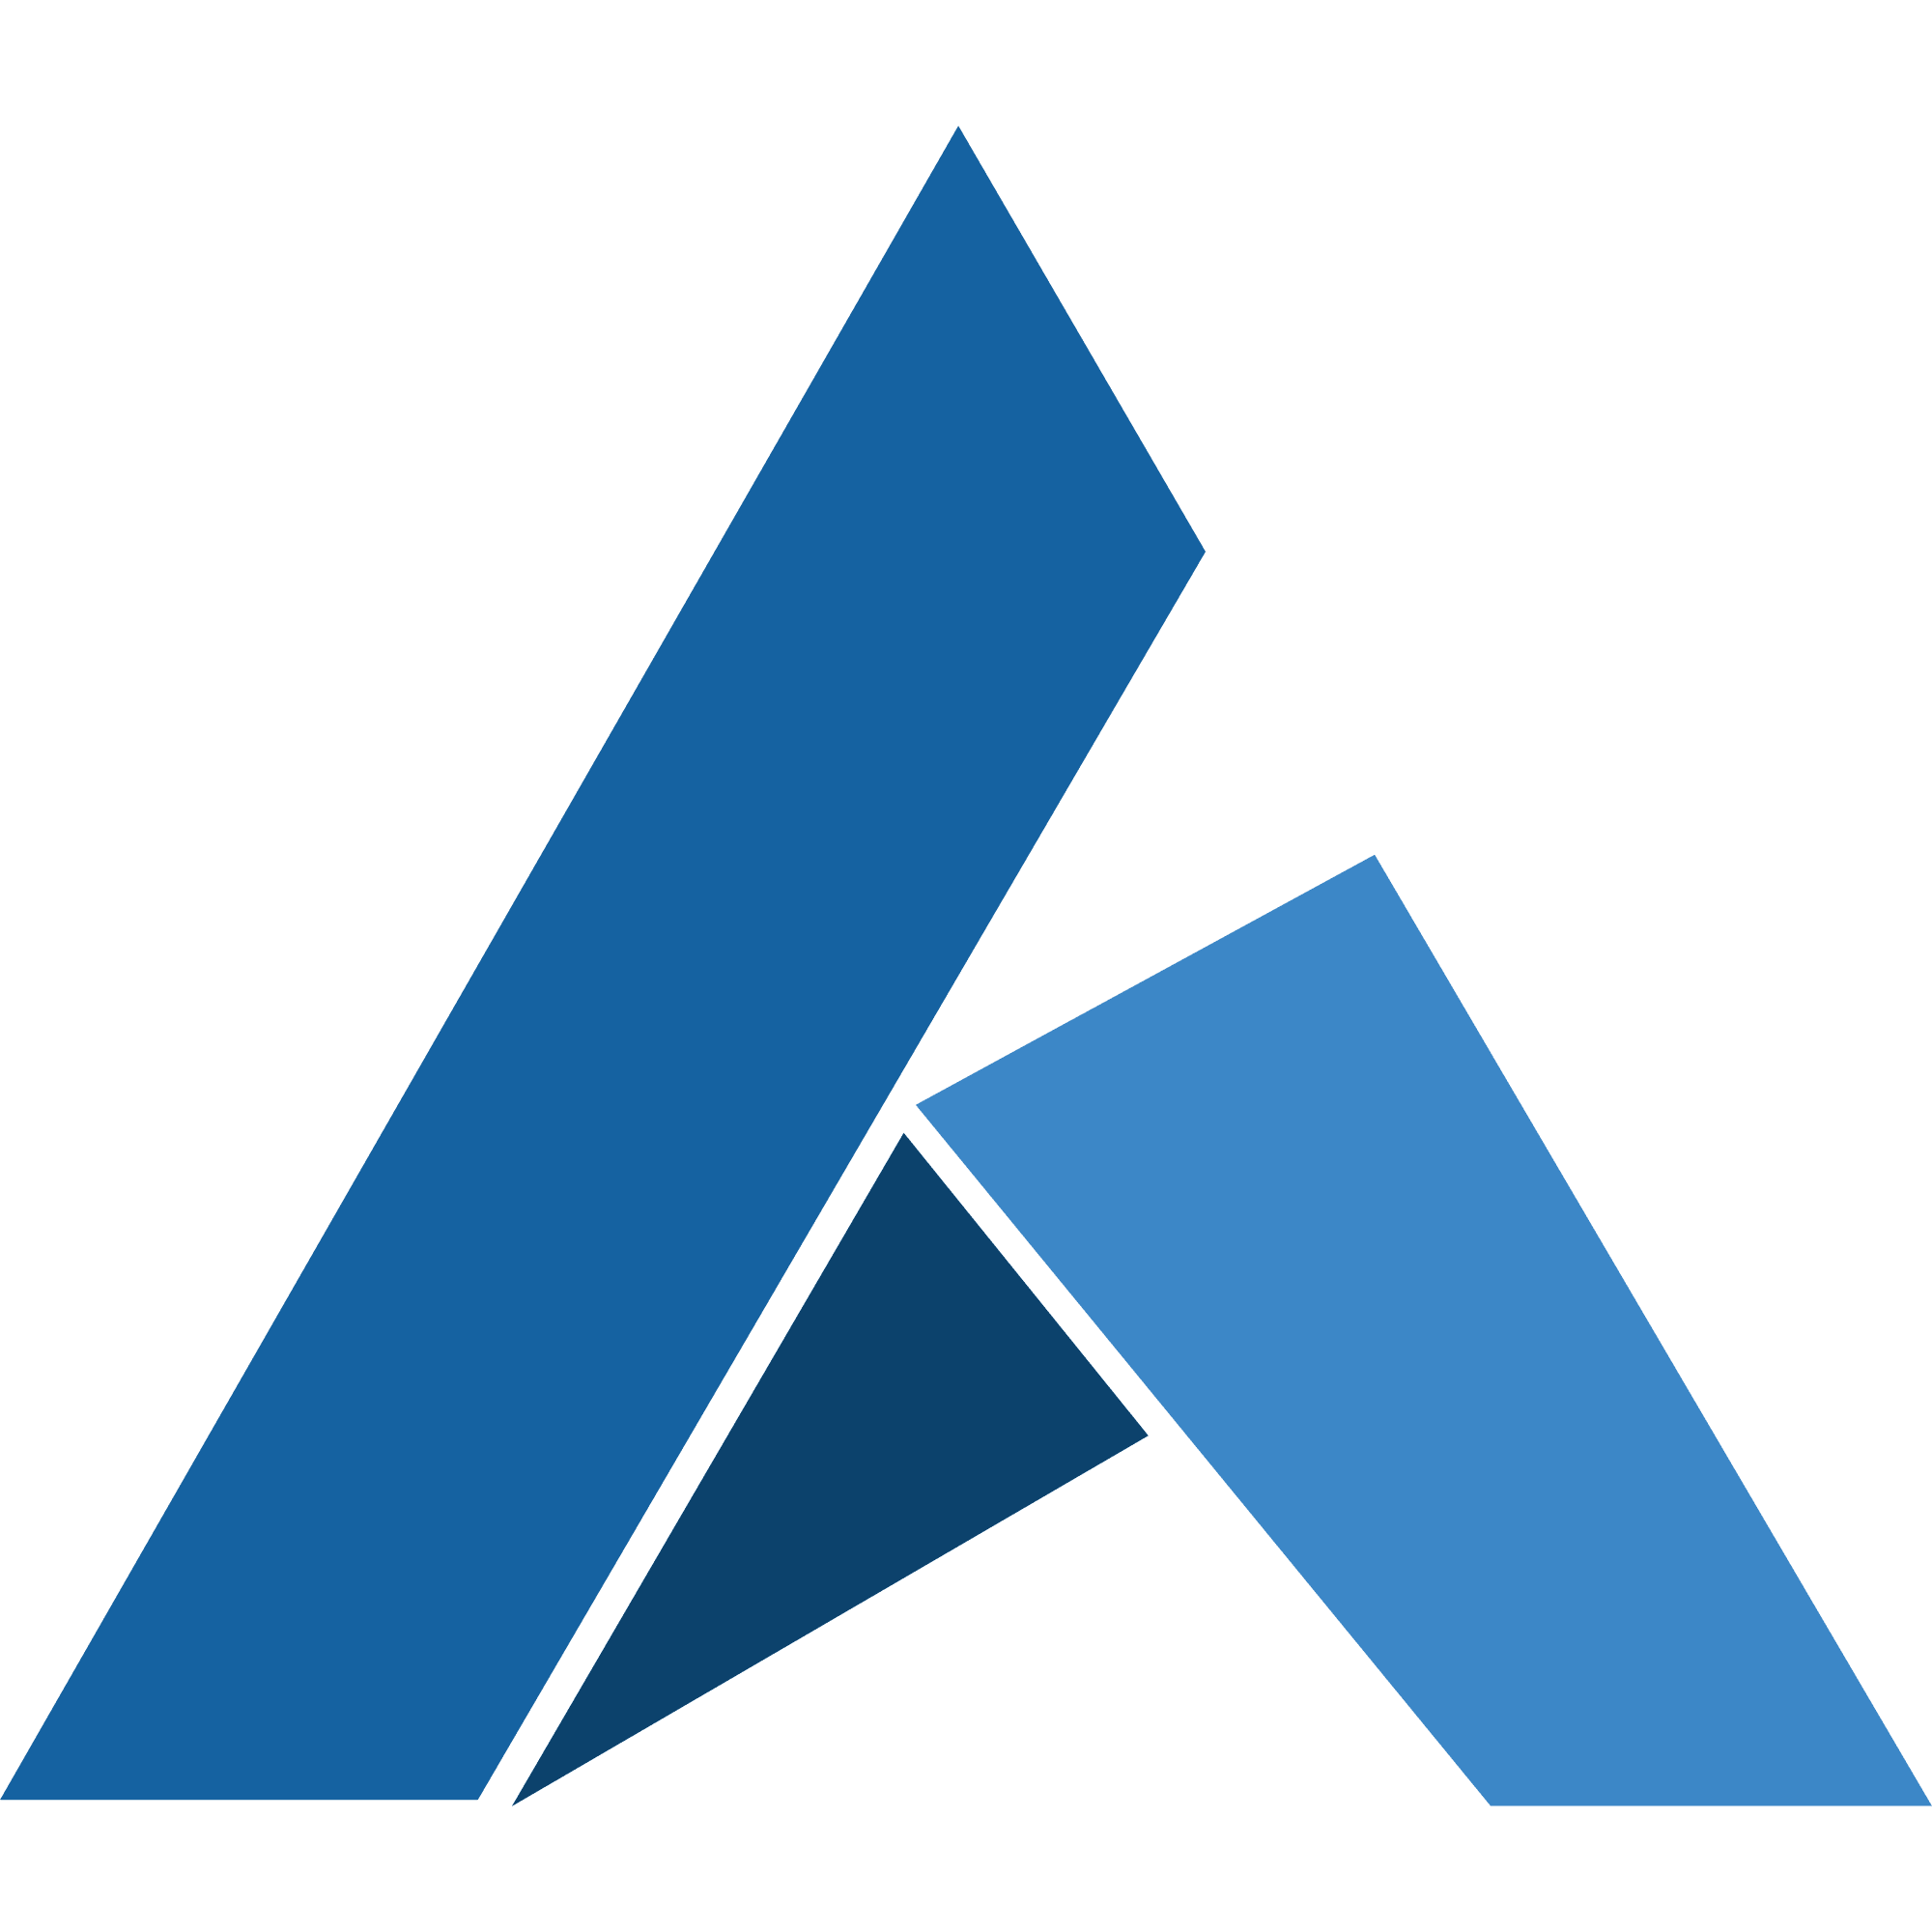 Ardor logo in png format